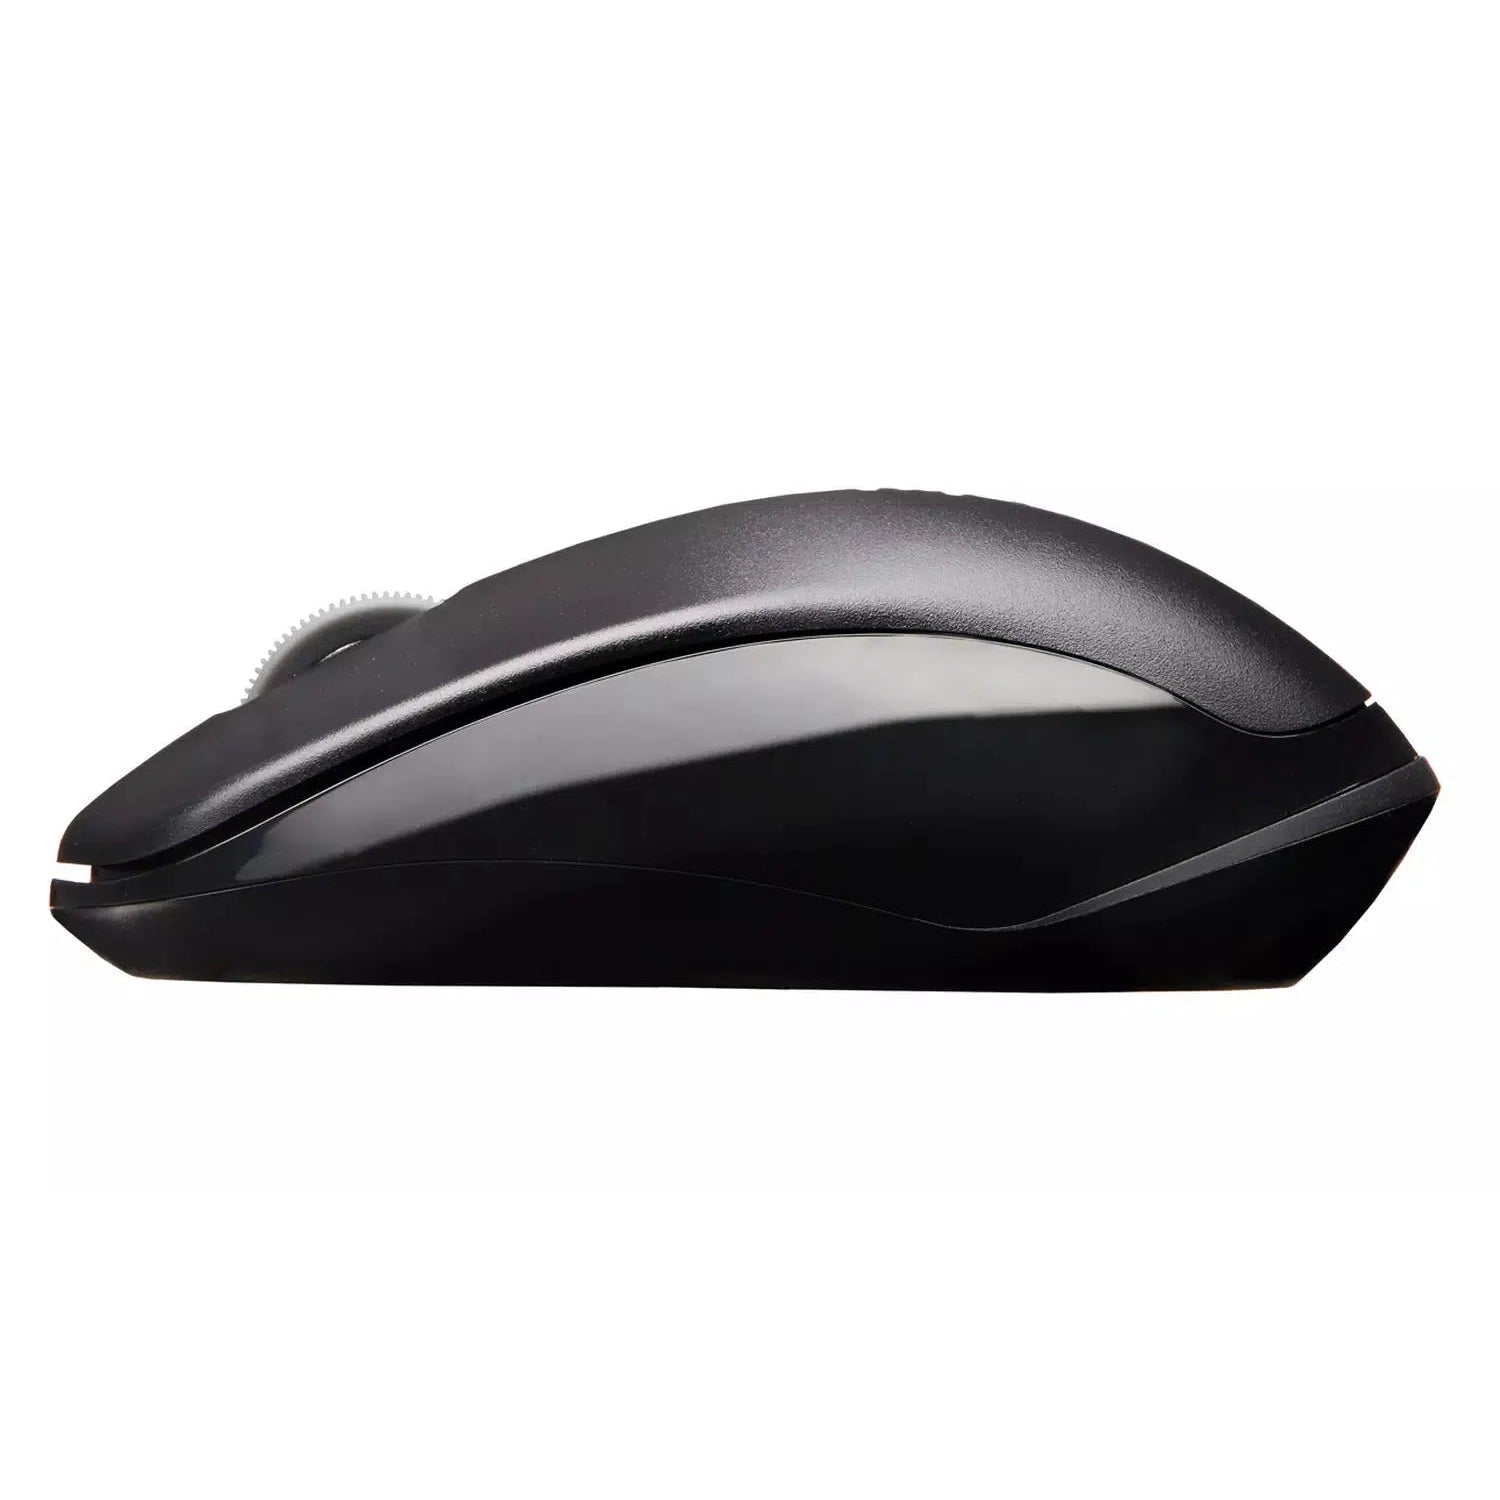 Rapoo 1620 Wireless Optical Mouse - Black - Refurbished Pristine